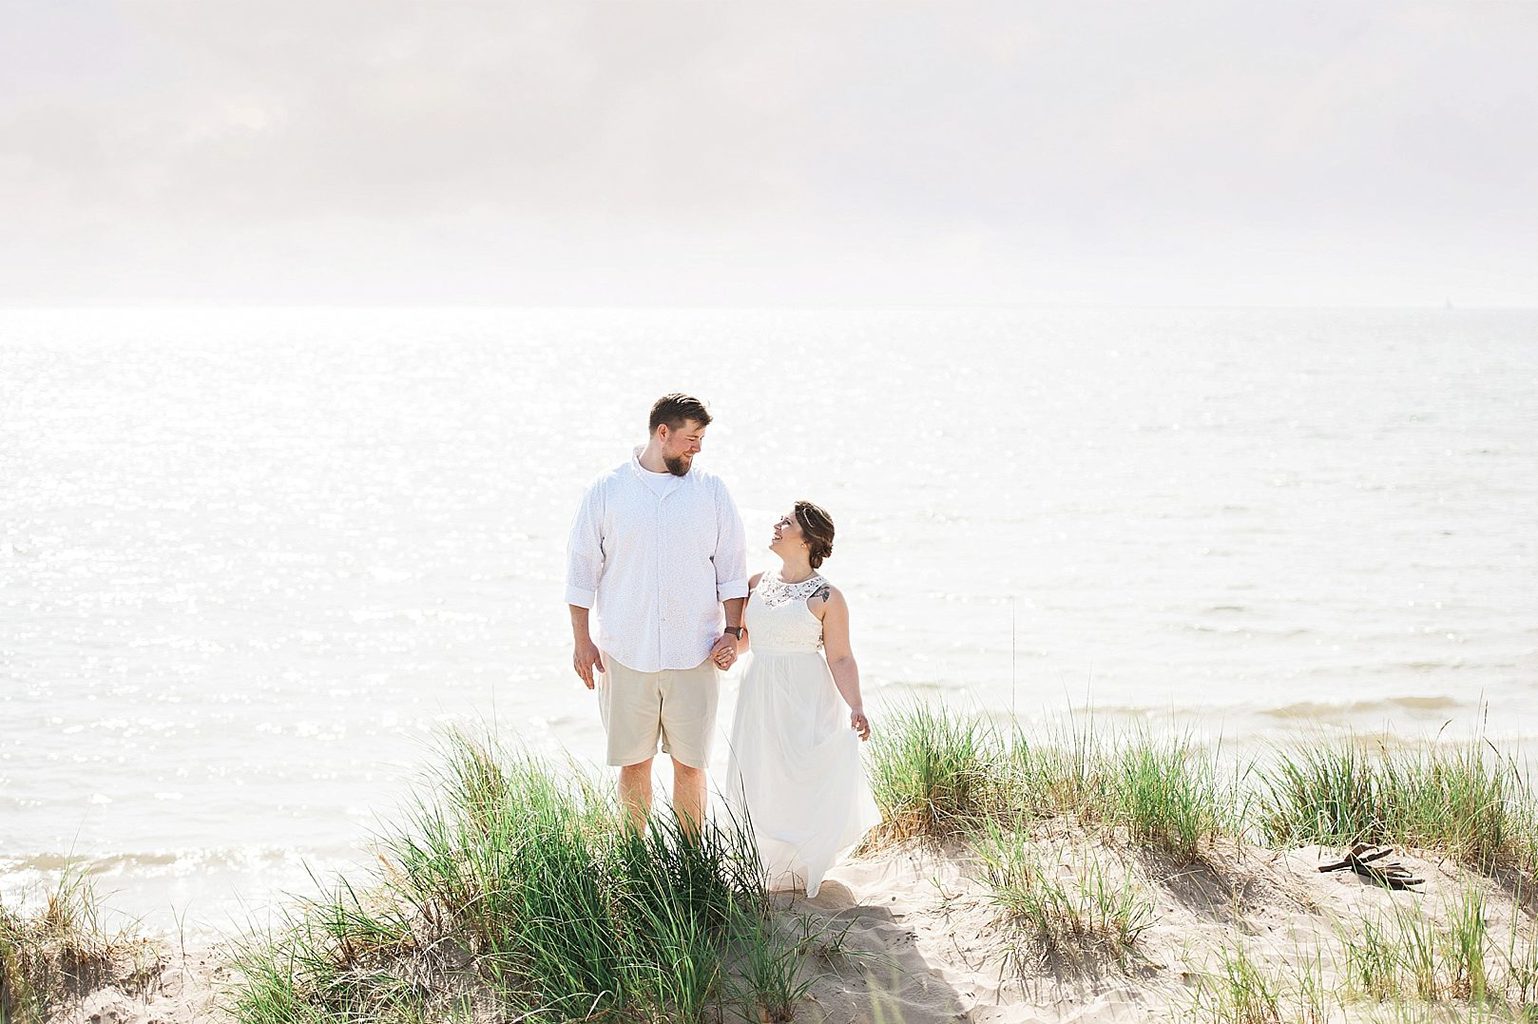 Musekgon wedding venues: Michigan beach wedding photos